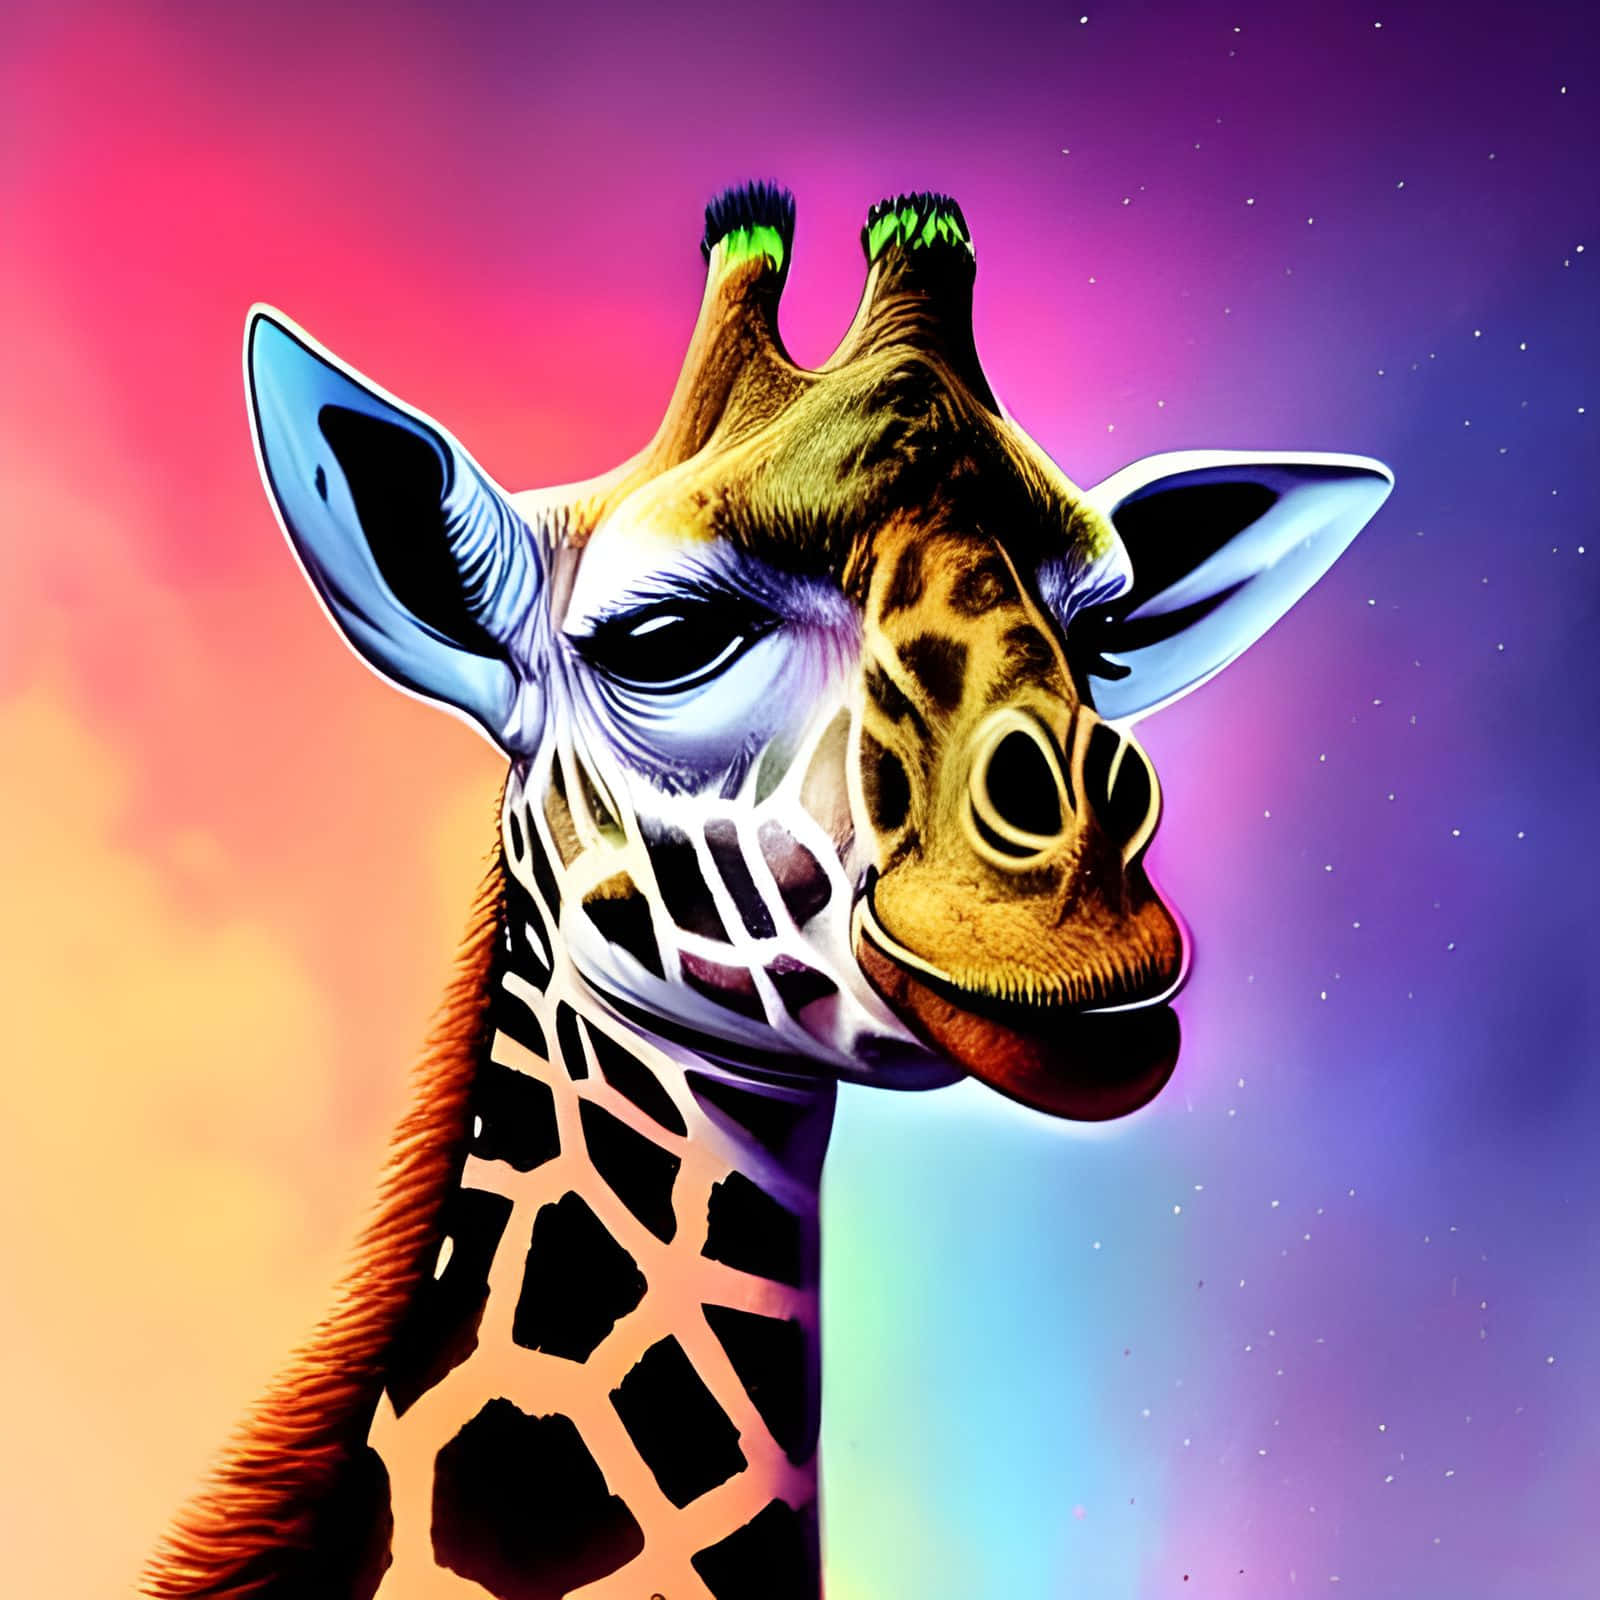 Giraffe Desktop Background 75 pictures